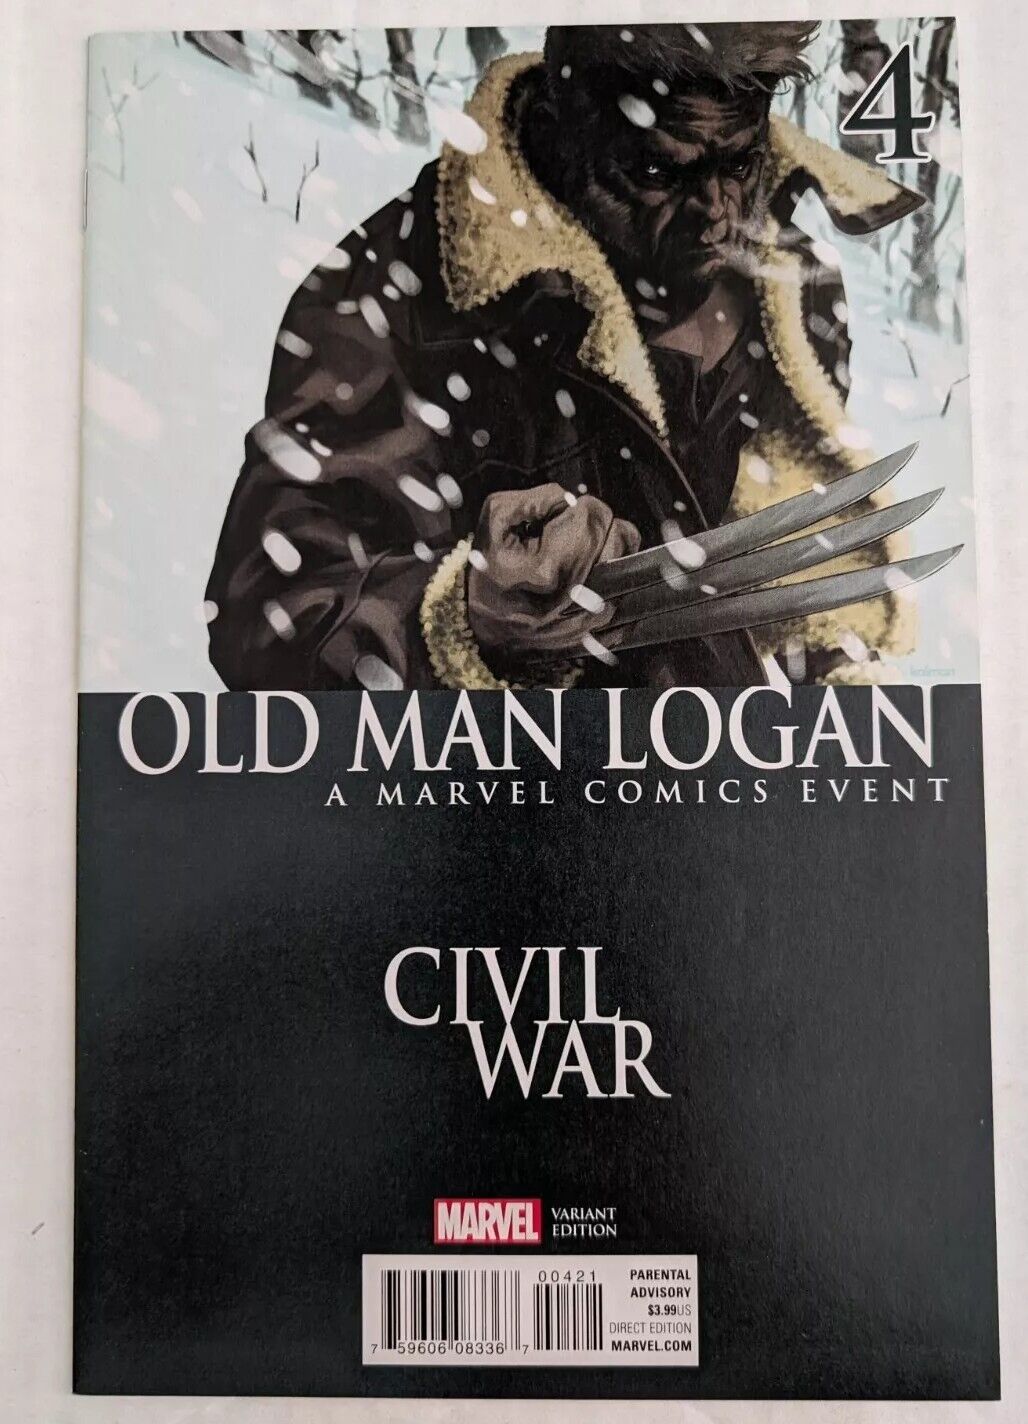 Old Man Logan #4 Civil War Variant